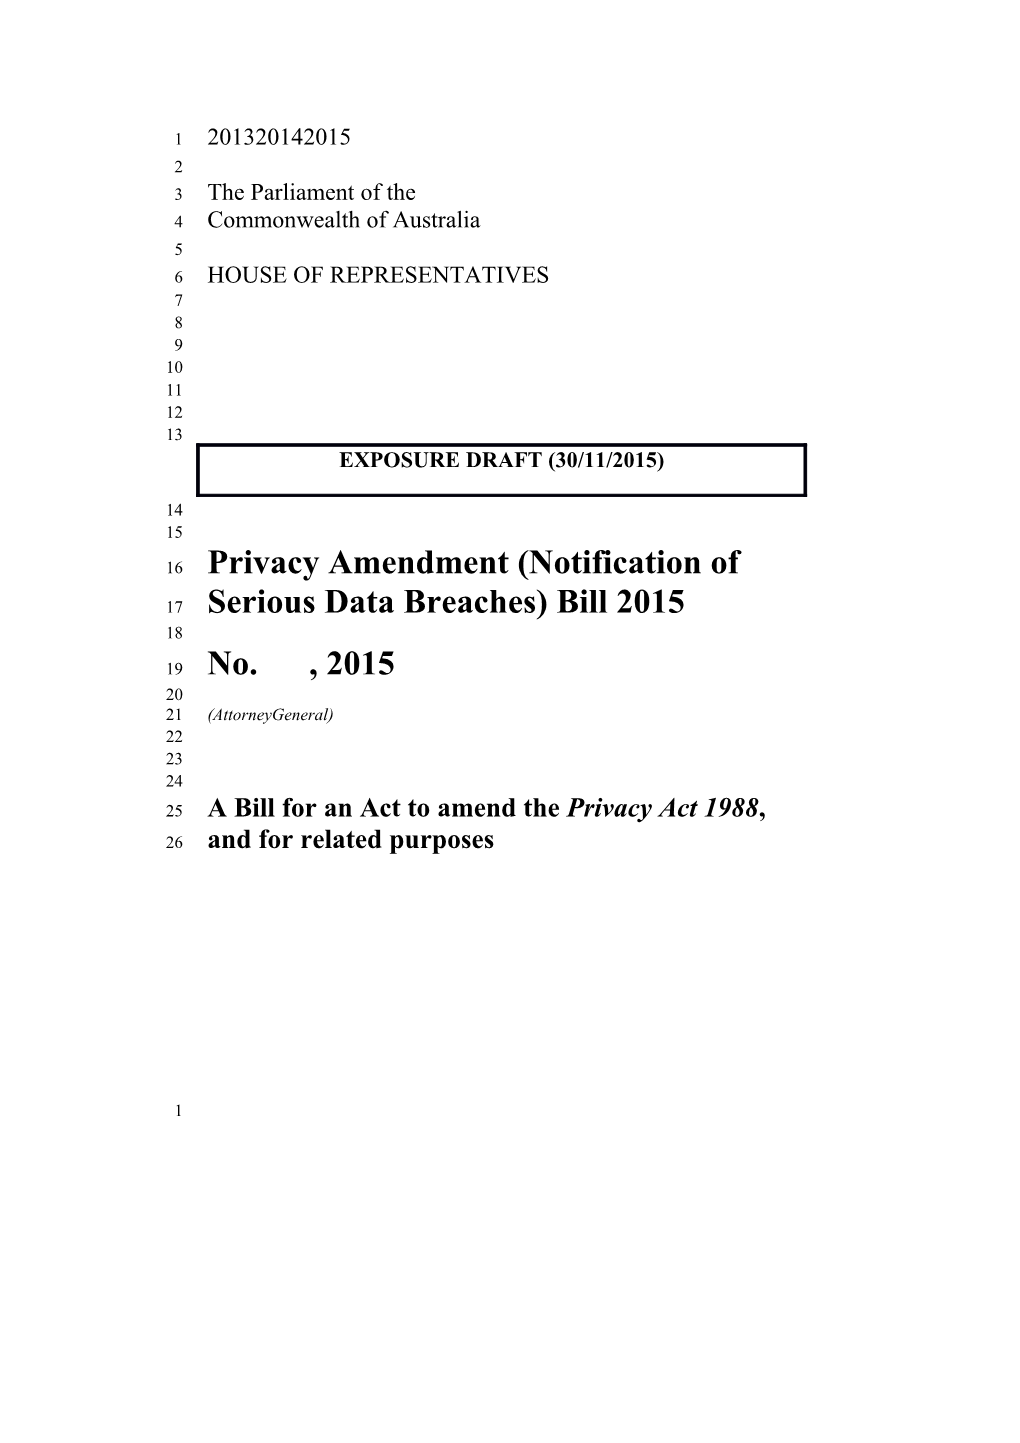 Privacy Amendment (Notification of Serious Data Breaches) Bill 2015